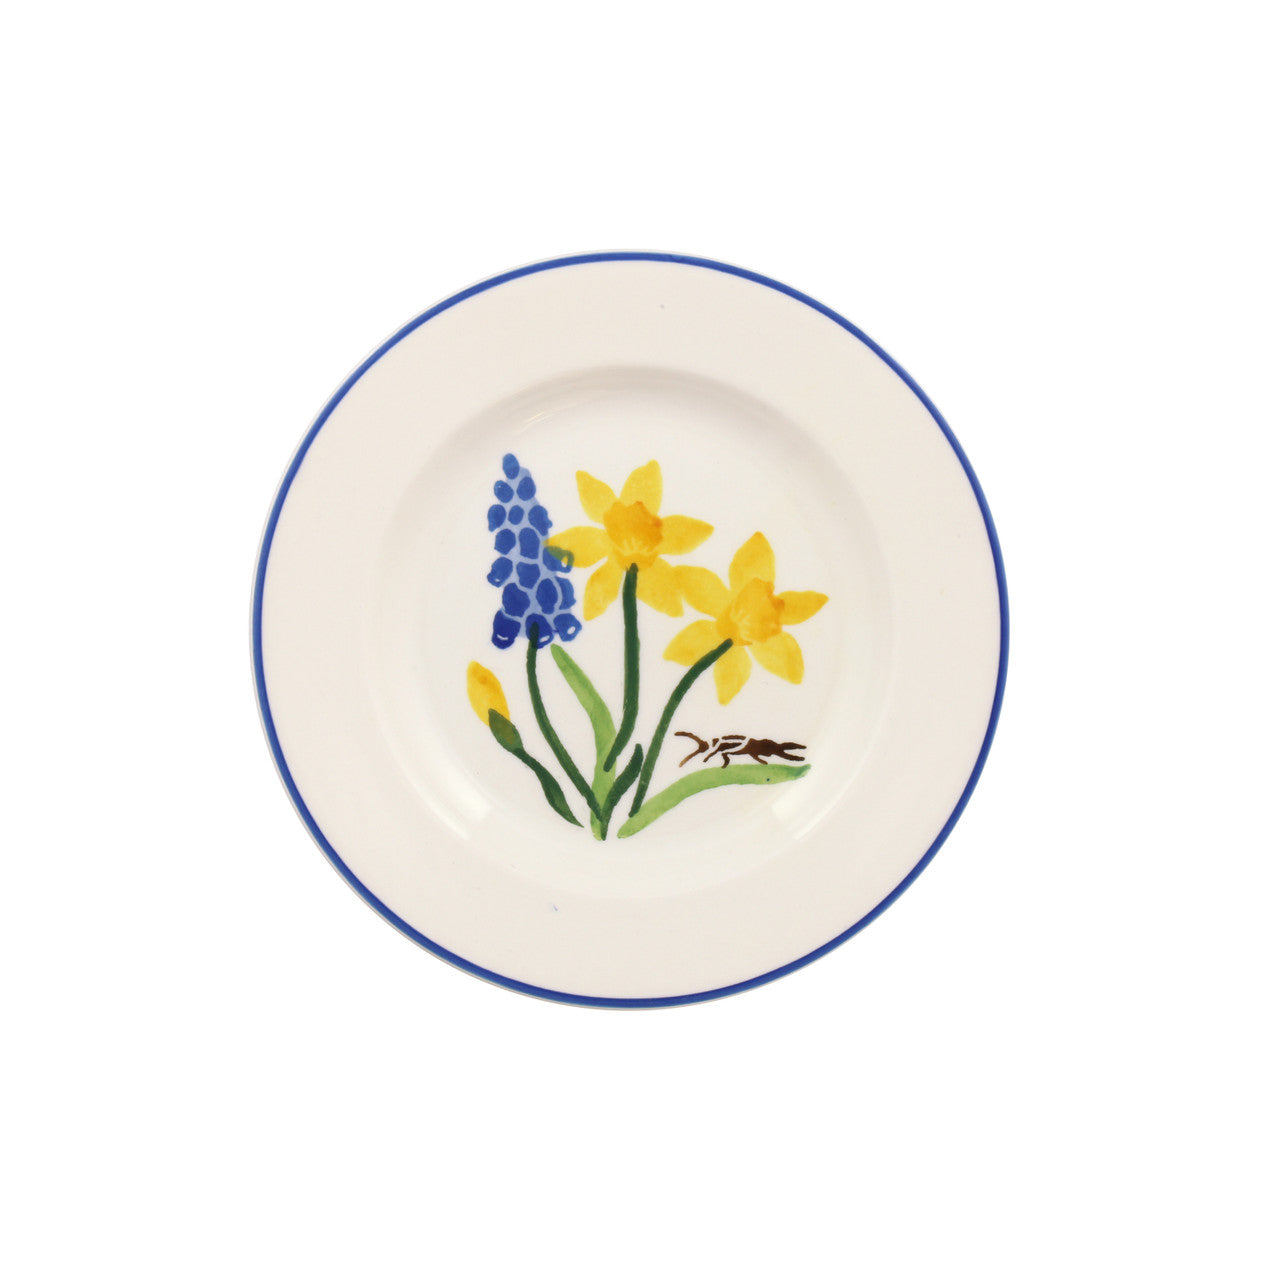 Little Daffodils 6 1/2 inch plate from Emma Bridgewater. Handmade in England.